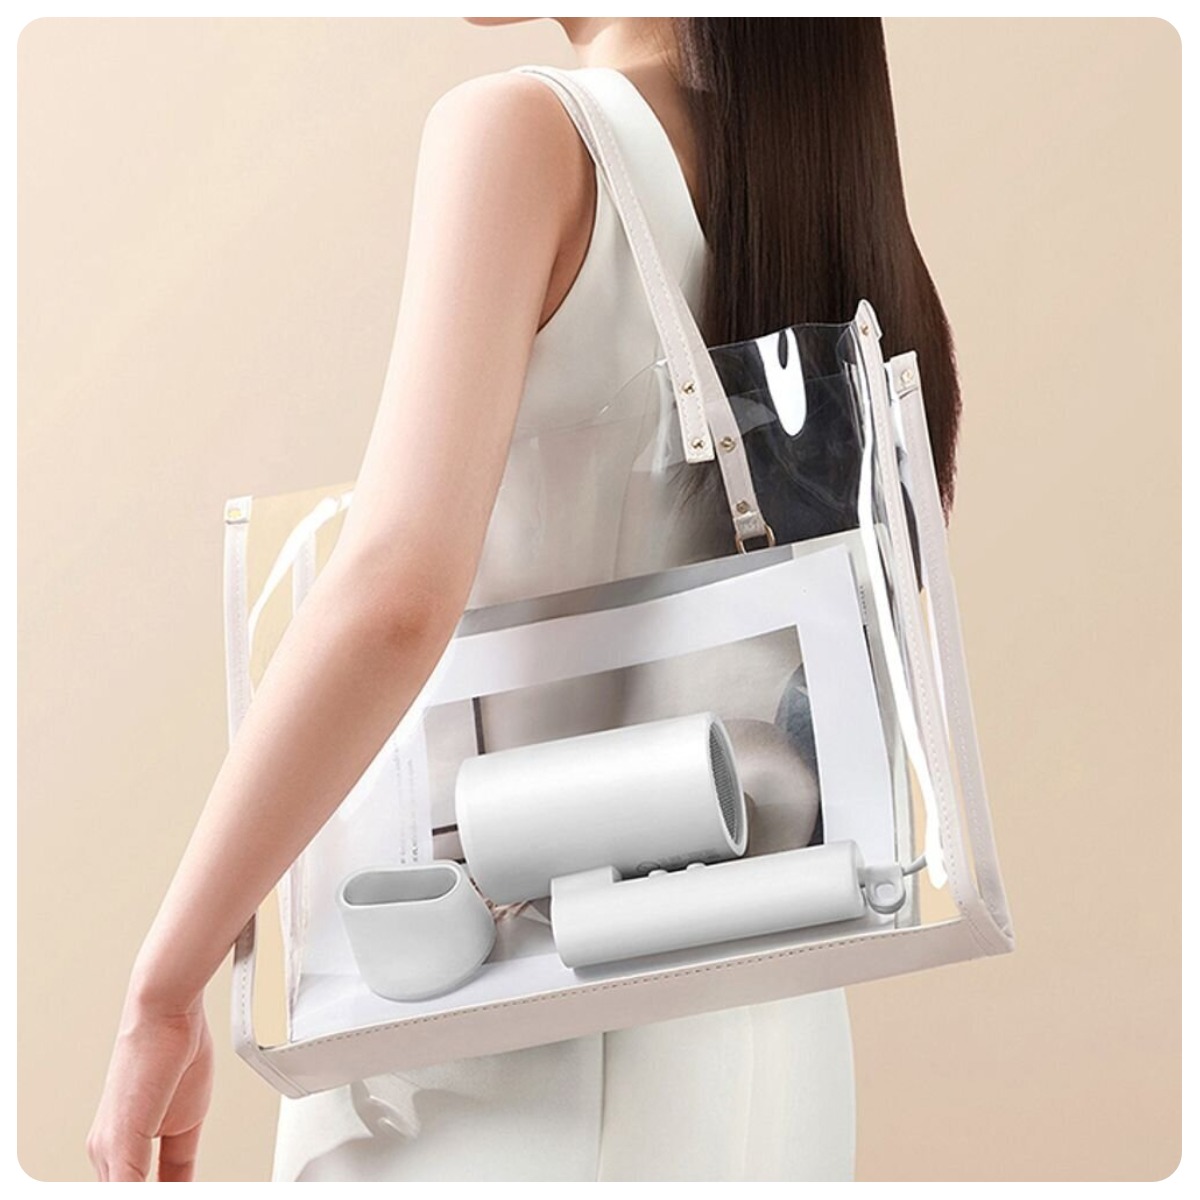 XiaoMi-Mijia-Negative-Ion-Hair-Dryer-H101-02